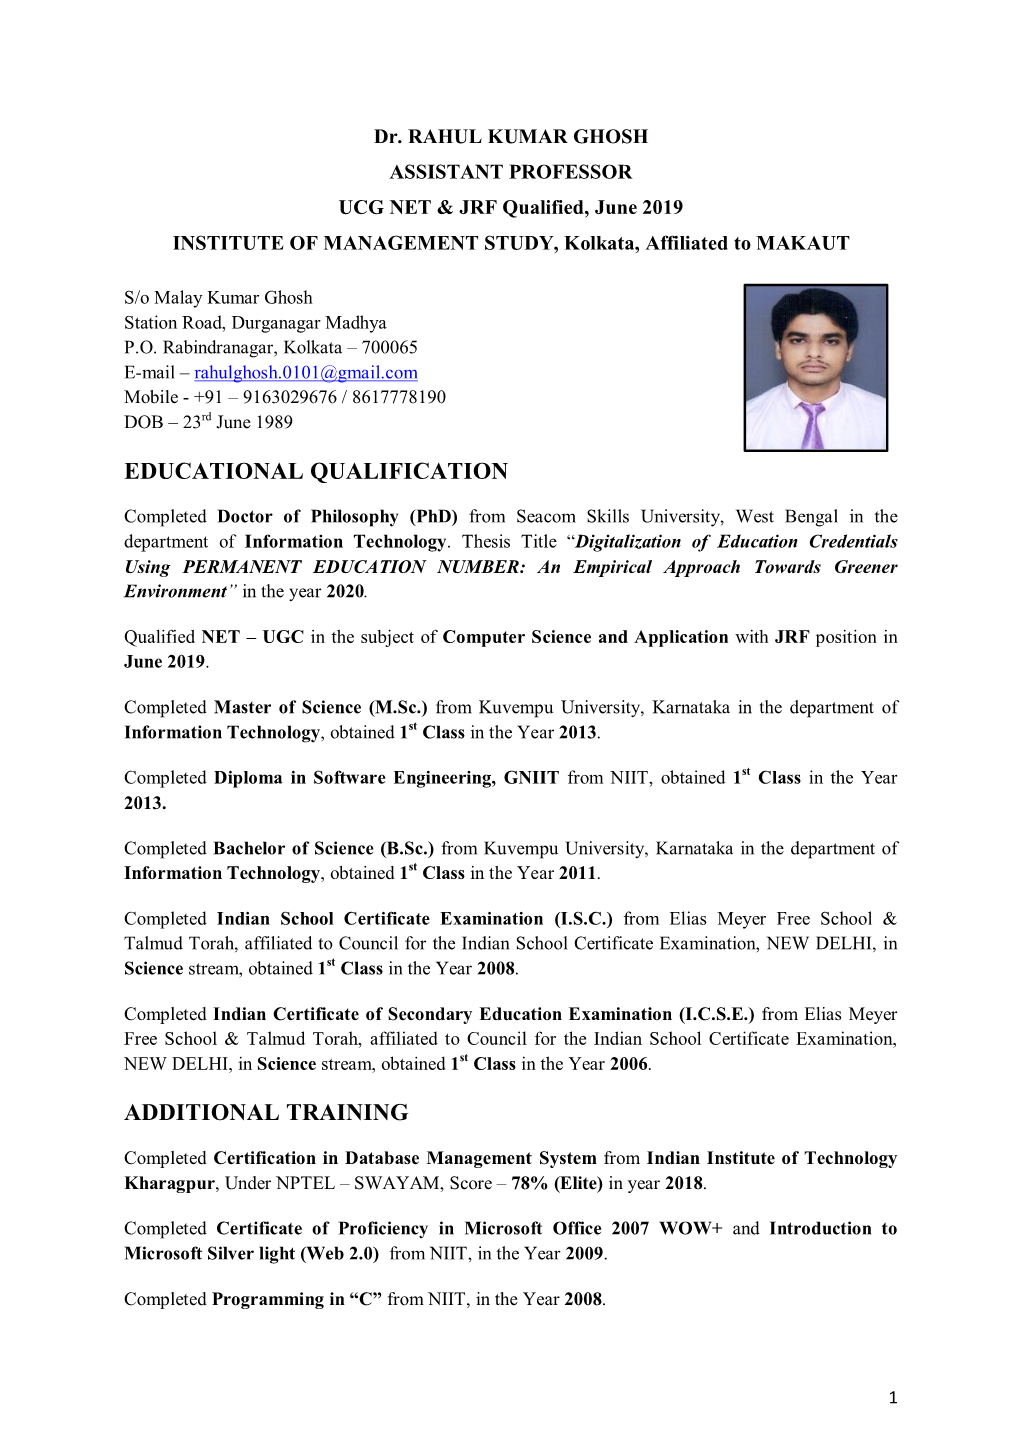 Dr. RAHUL KUMAR GHOSH ASSISTANT PROFESSOR UCG NET & JRF Qualified, June 2019 INSTITUTE of MANAGEMENT STUDY, Kolkata, Affiliated to MAKAUT